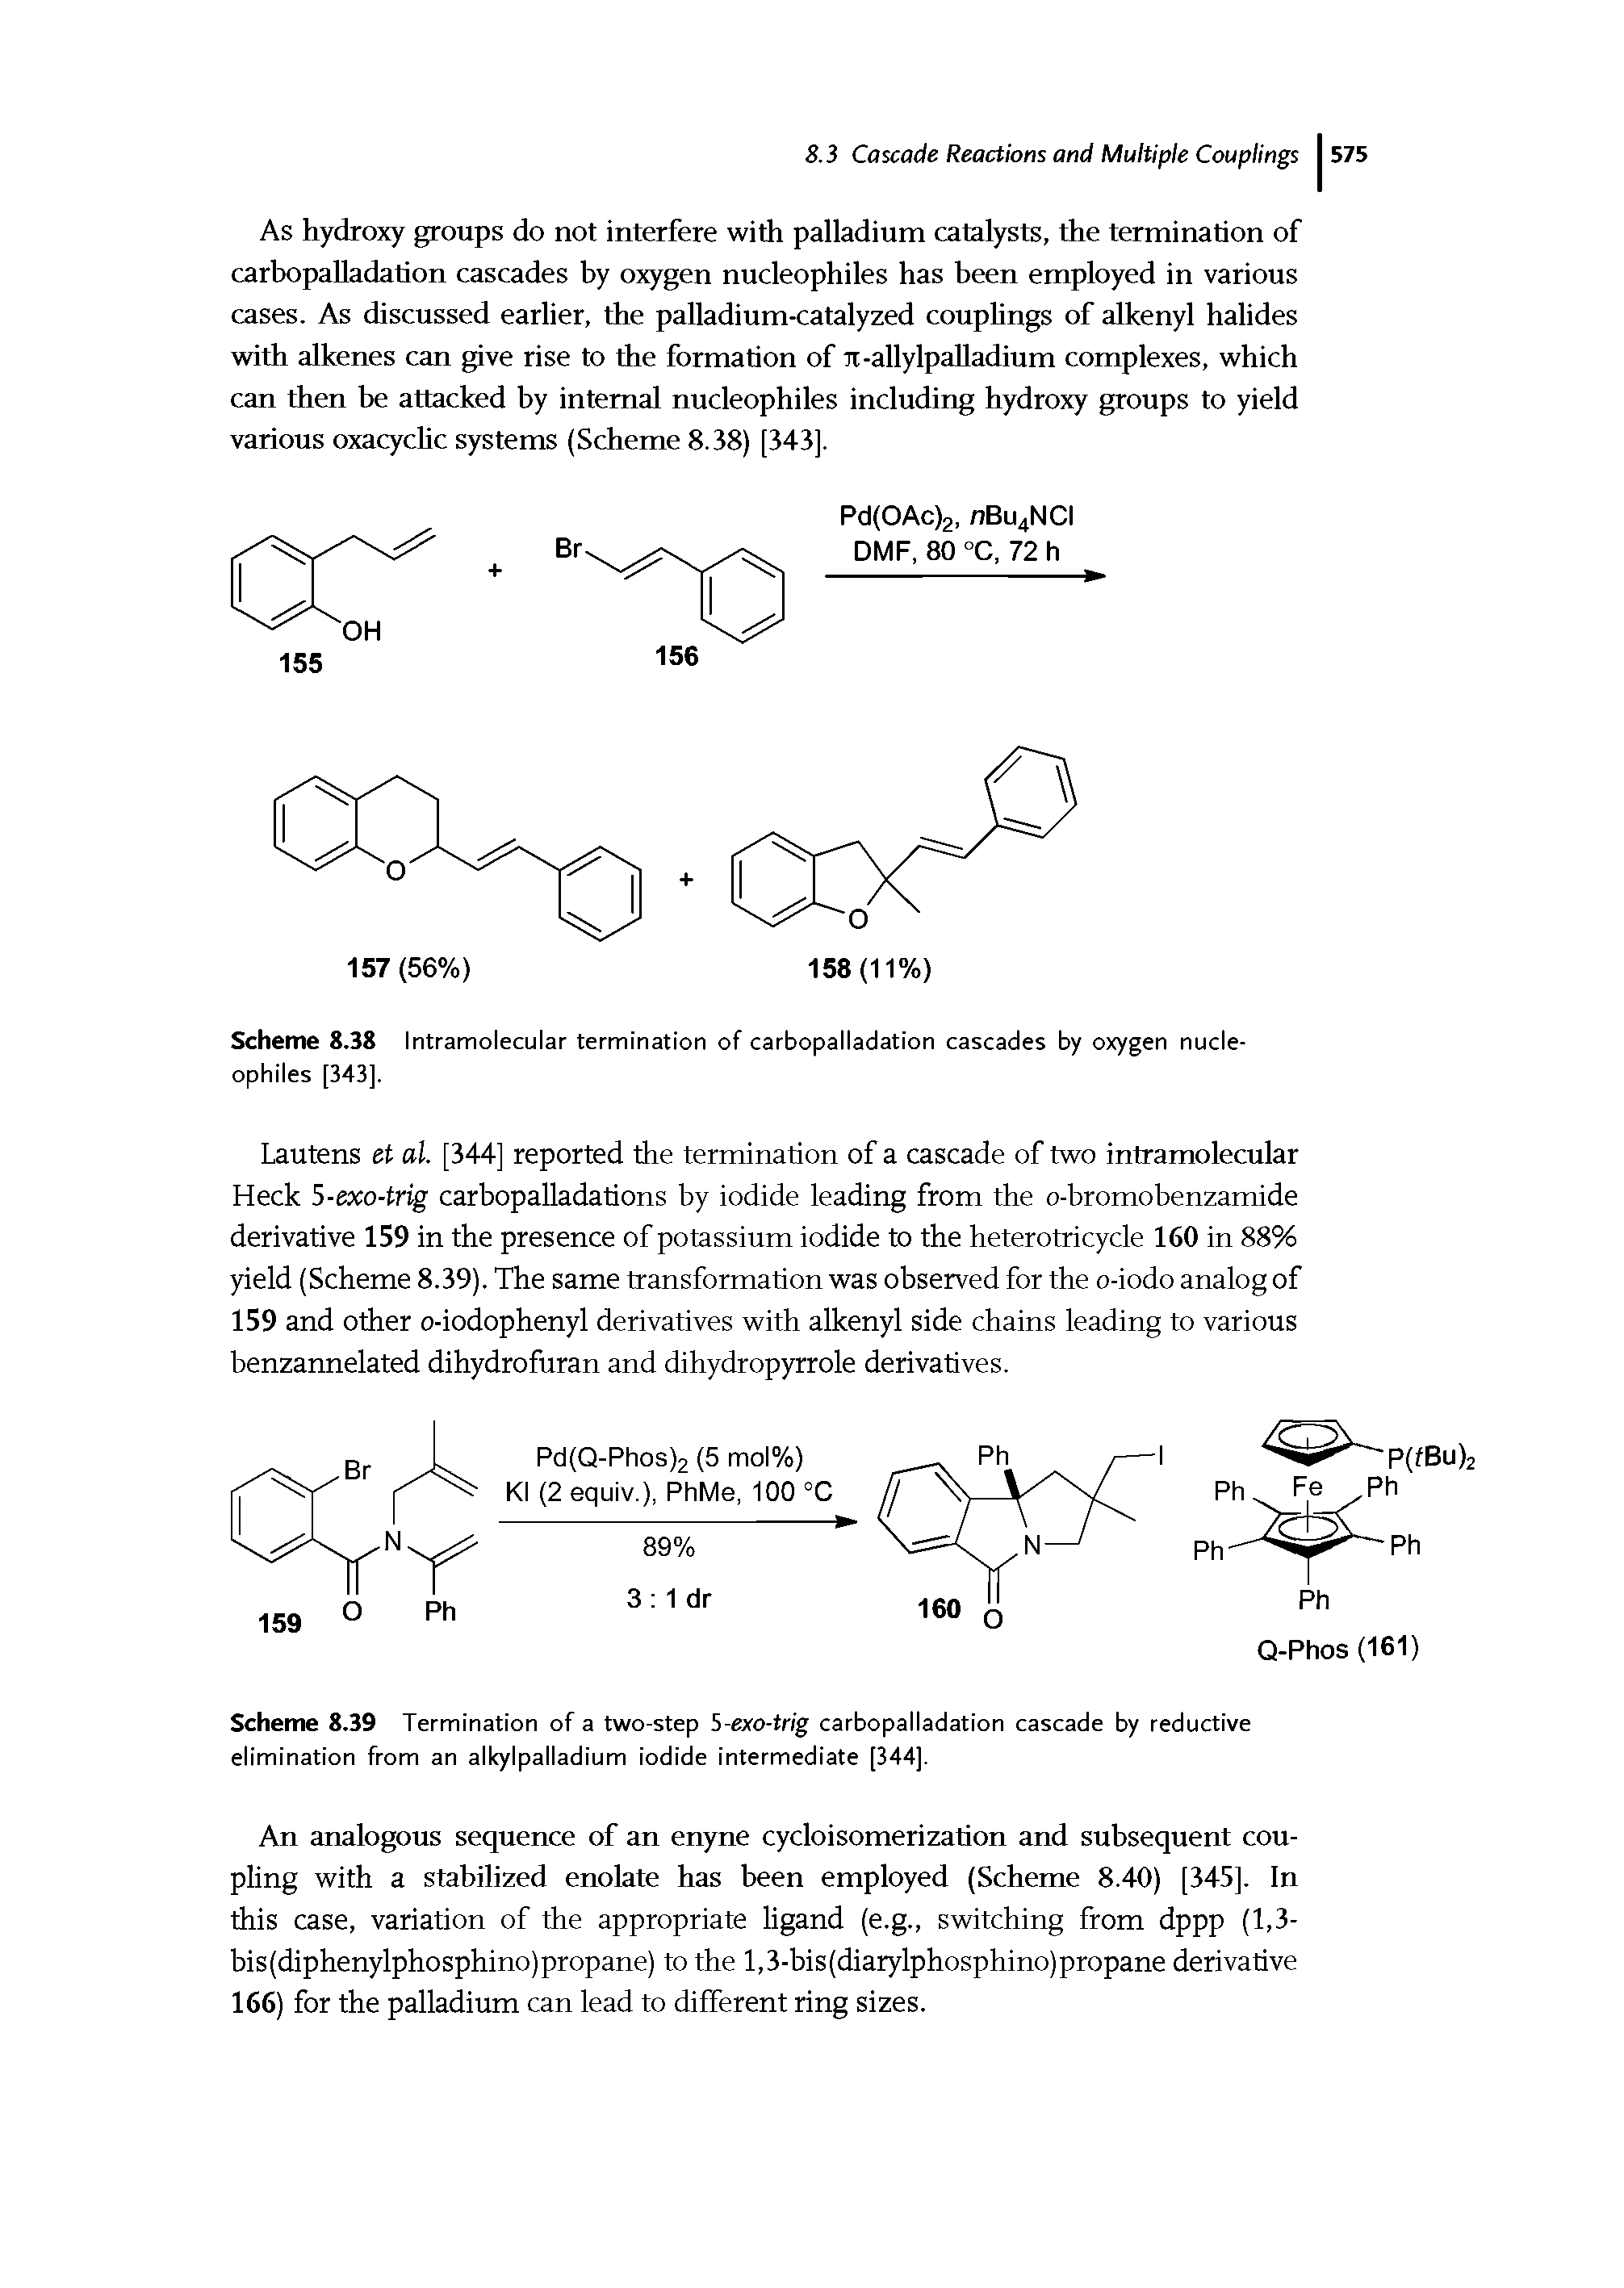 Scheme 8.39 Termination of a two-step 5-exo-trig carbopalladation cascade by reductive elimination from an alkylpalladium iodide intermediate [344].